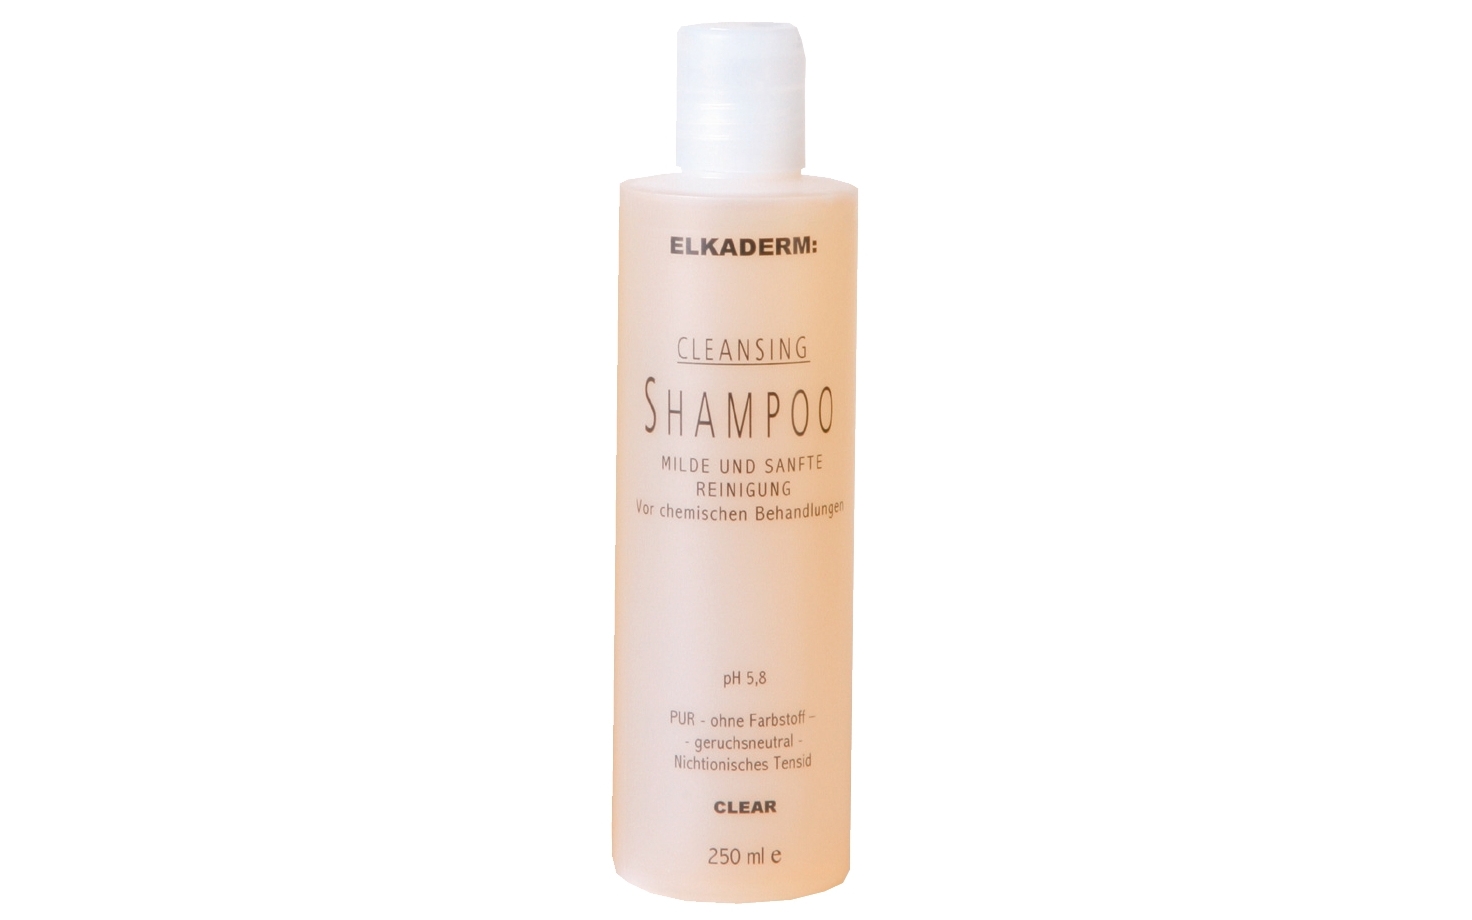 Elkaderm Cleansing Shampoo